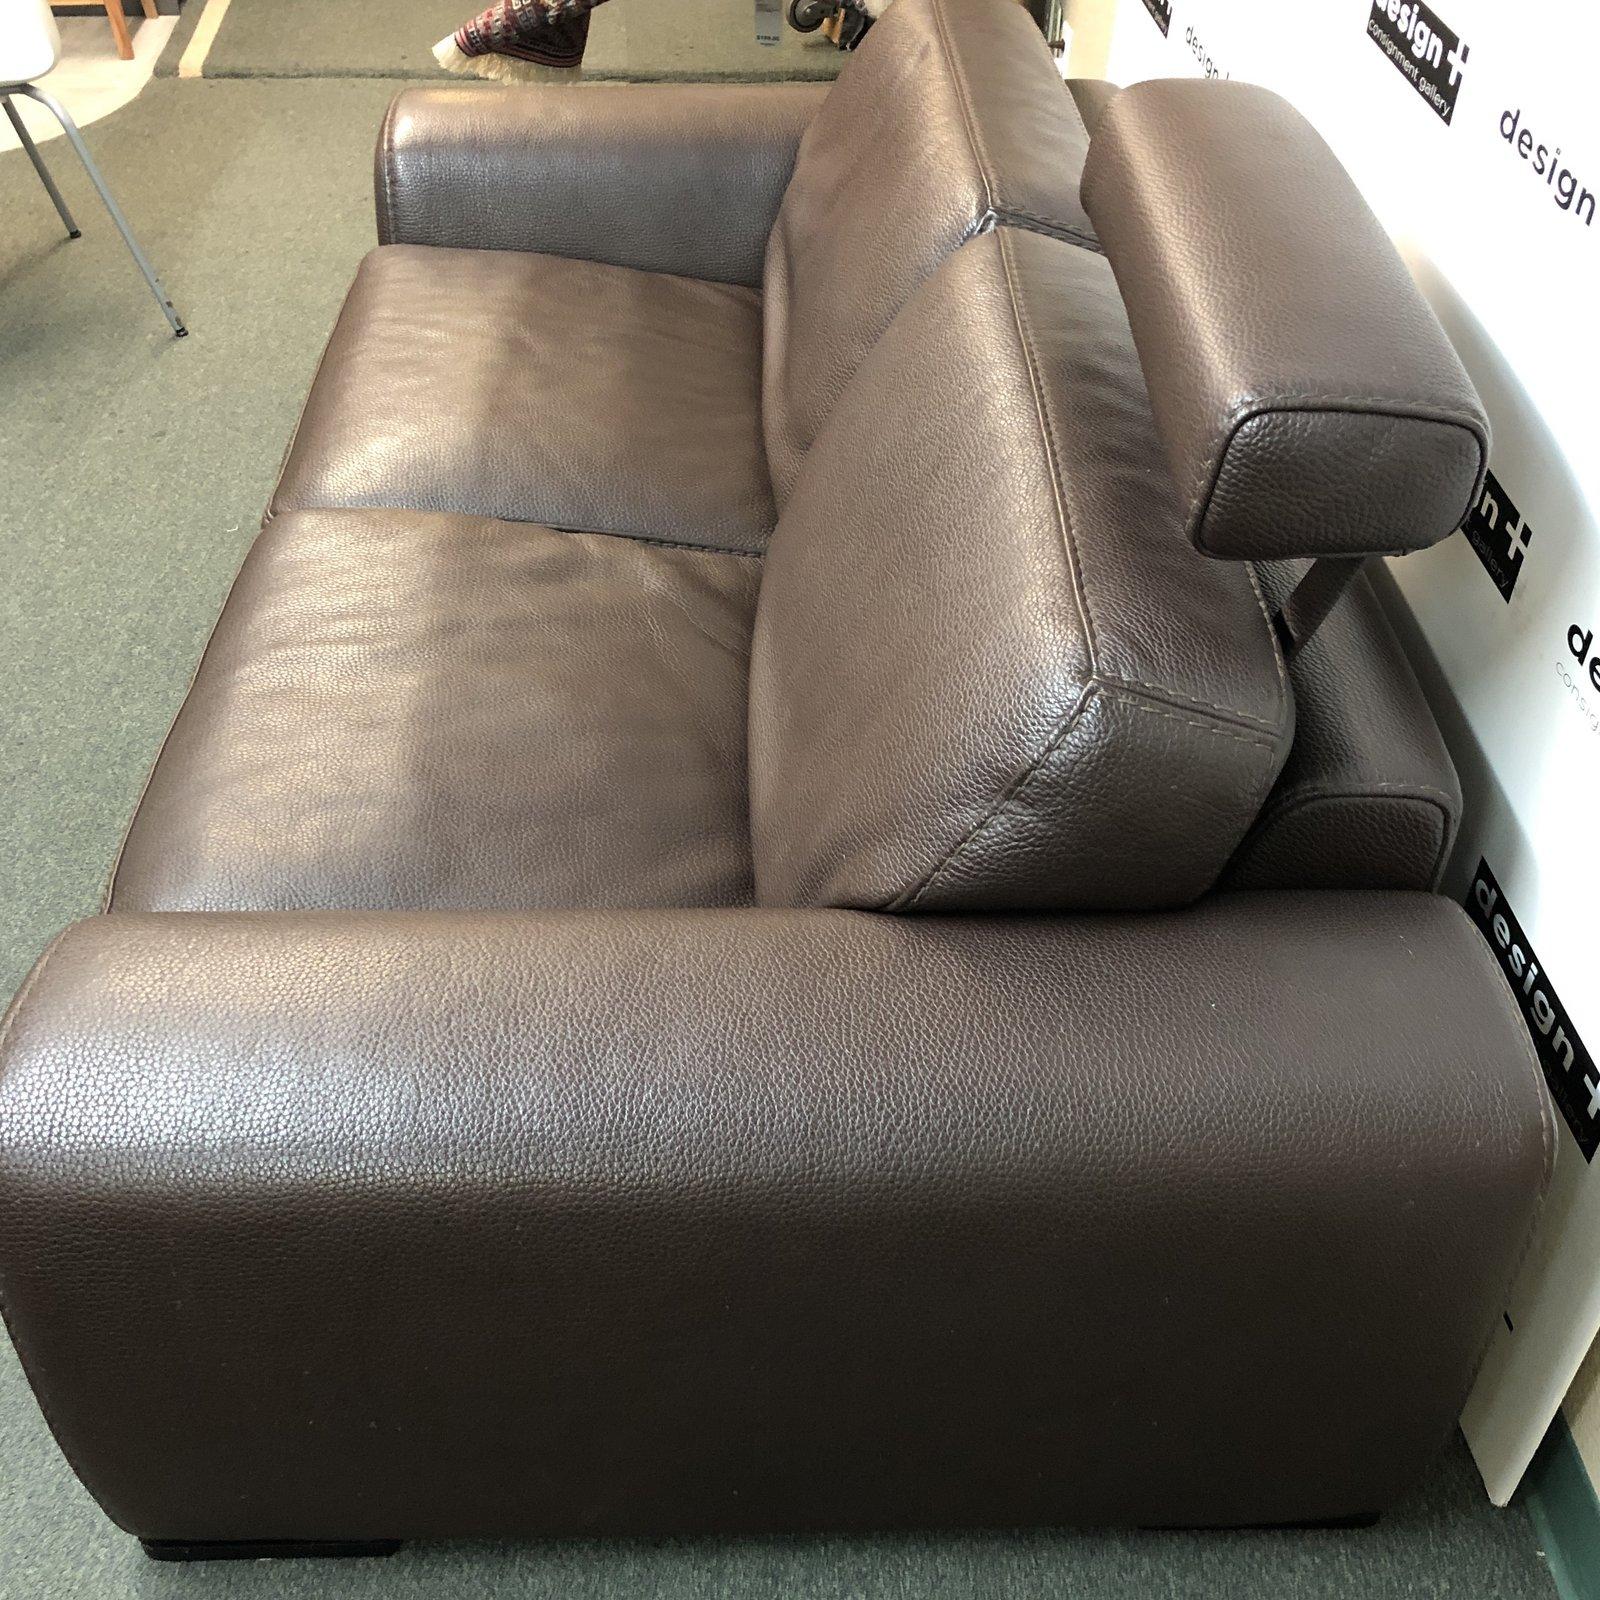 Roche Bobois Leather Sofa In Good Condition For Sale In San Francisco, CA